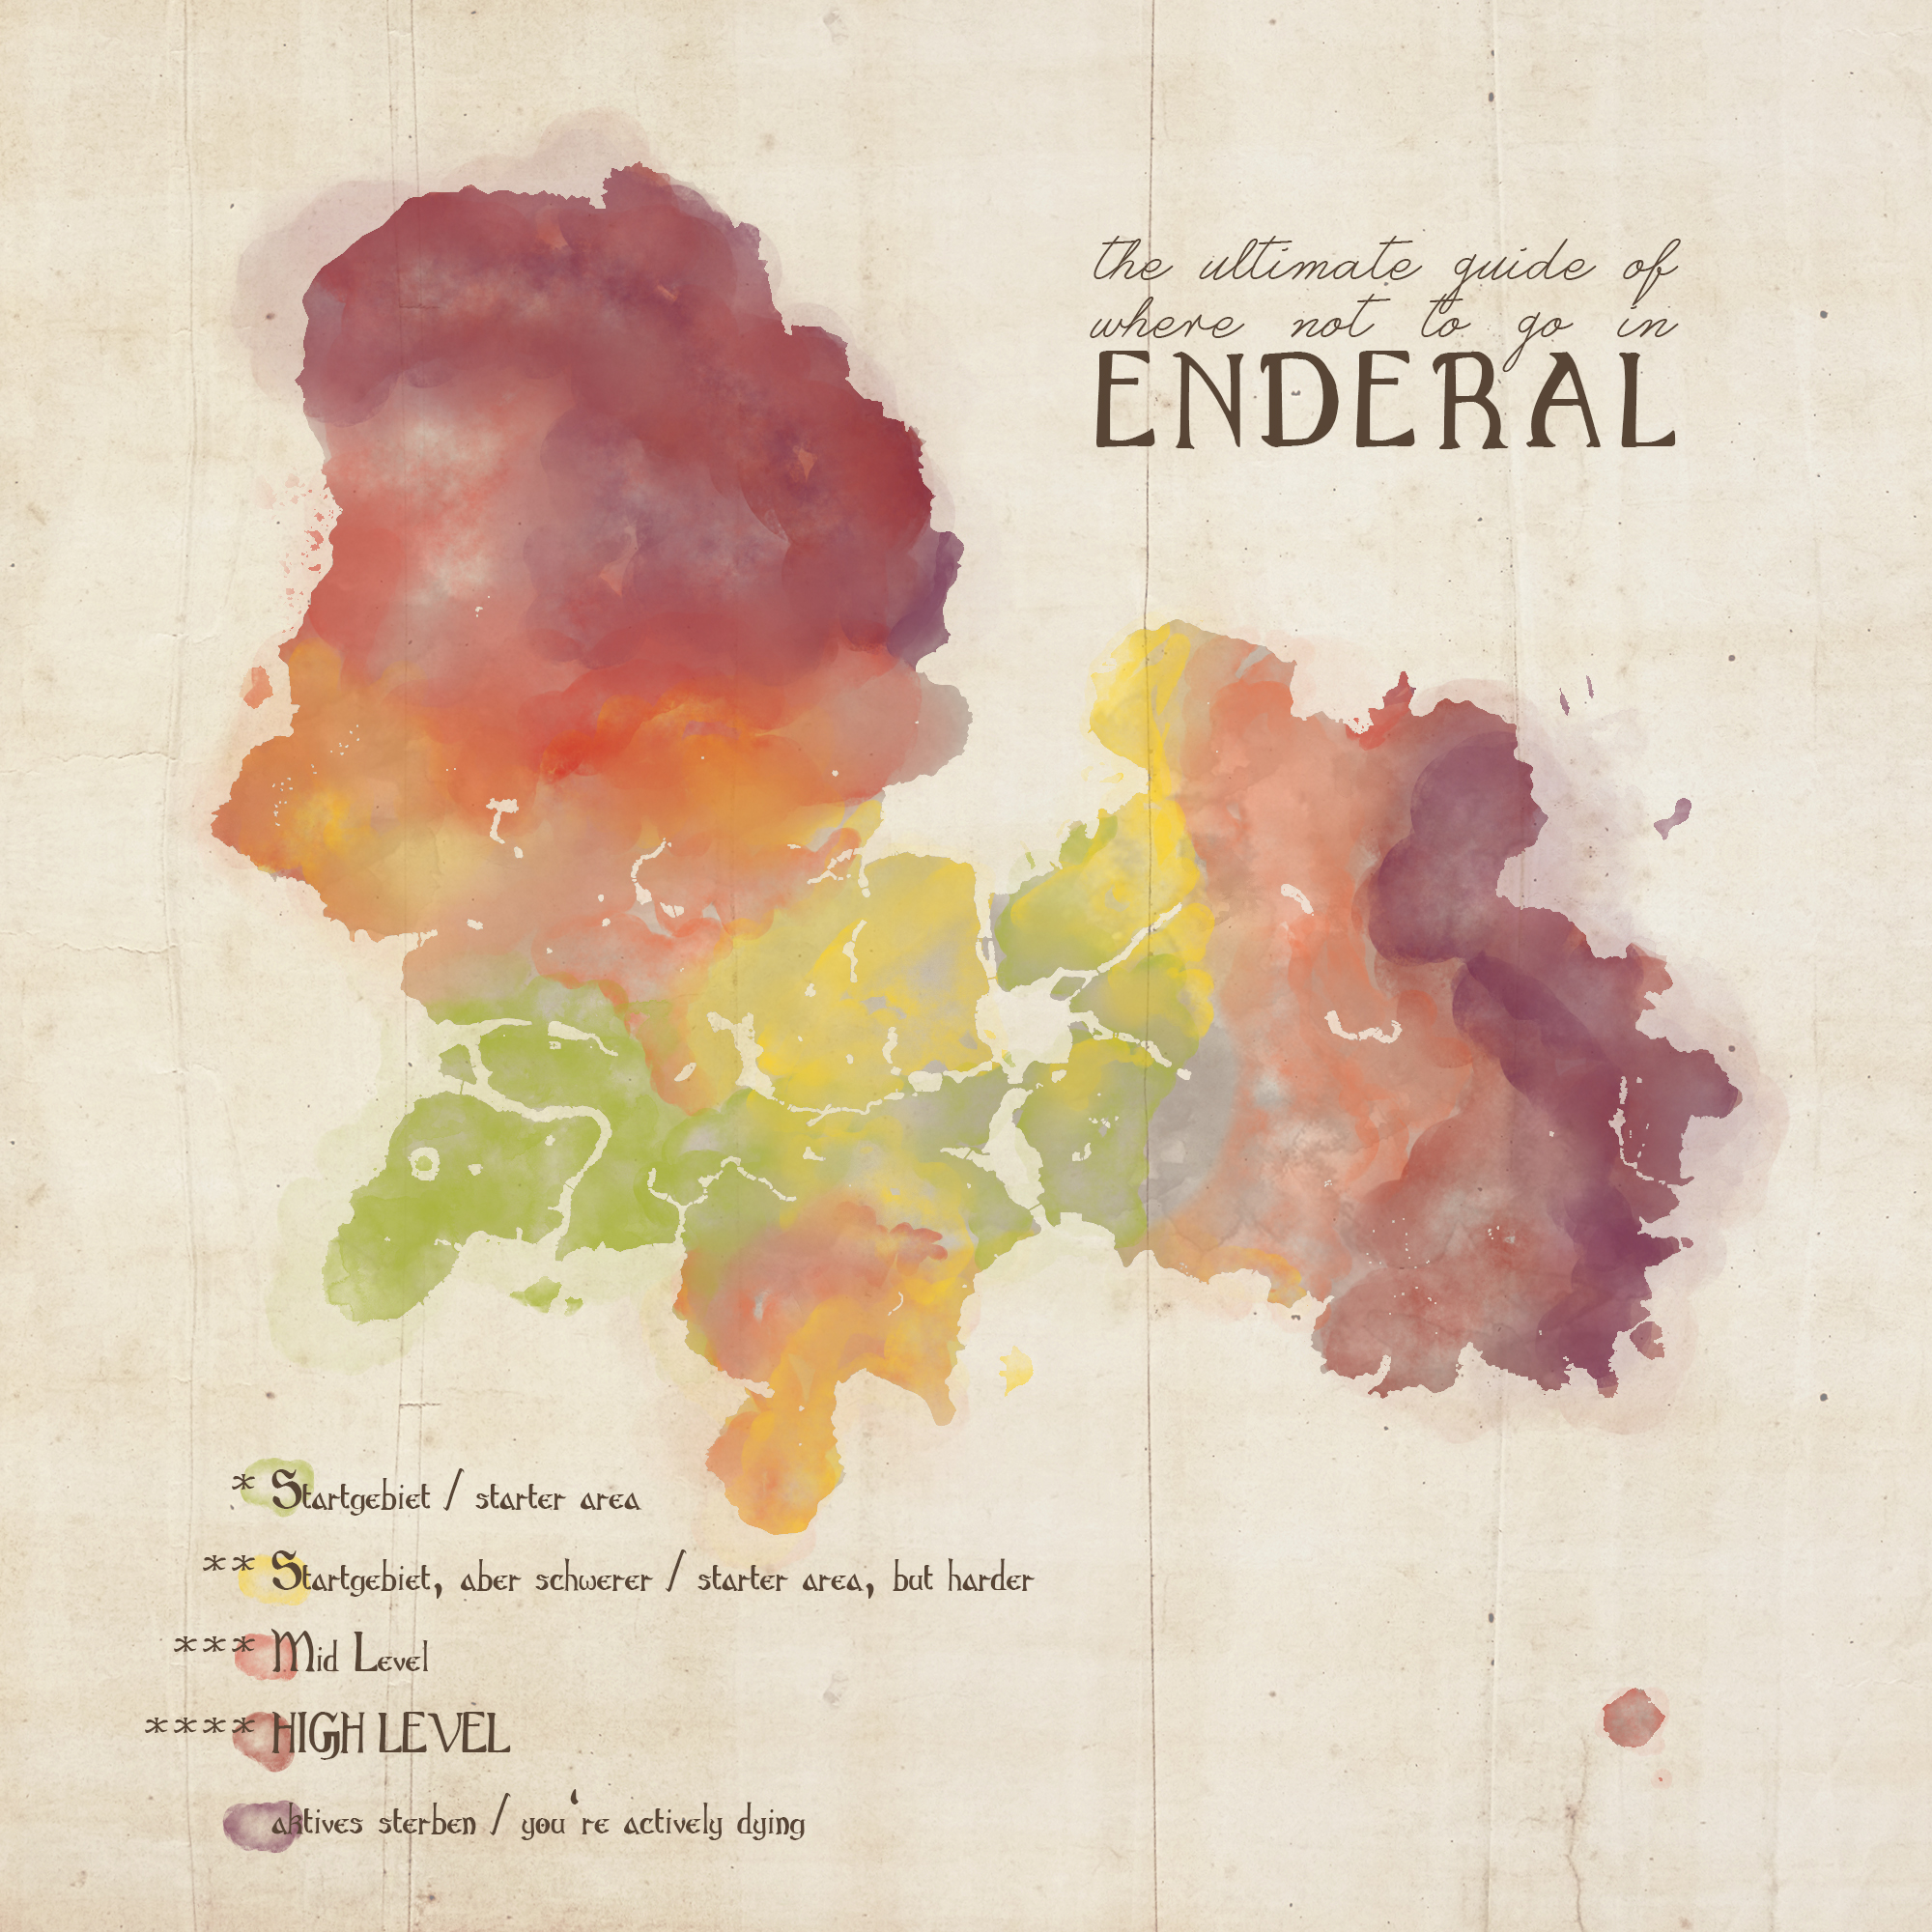 Enderal – urst die karten